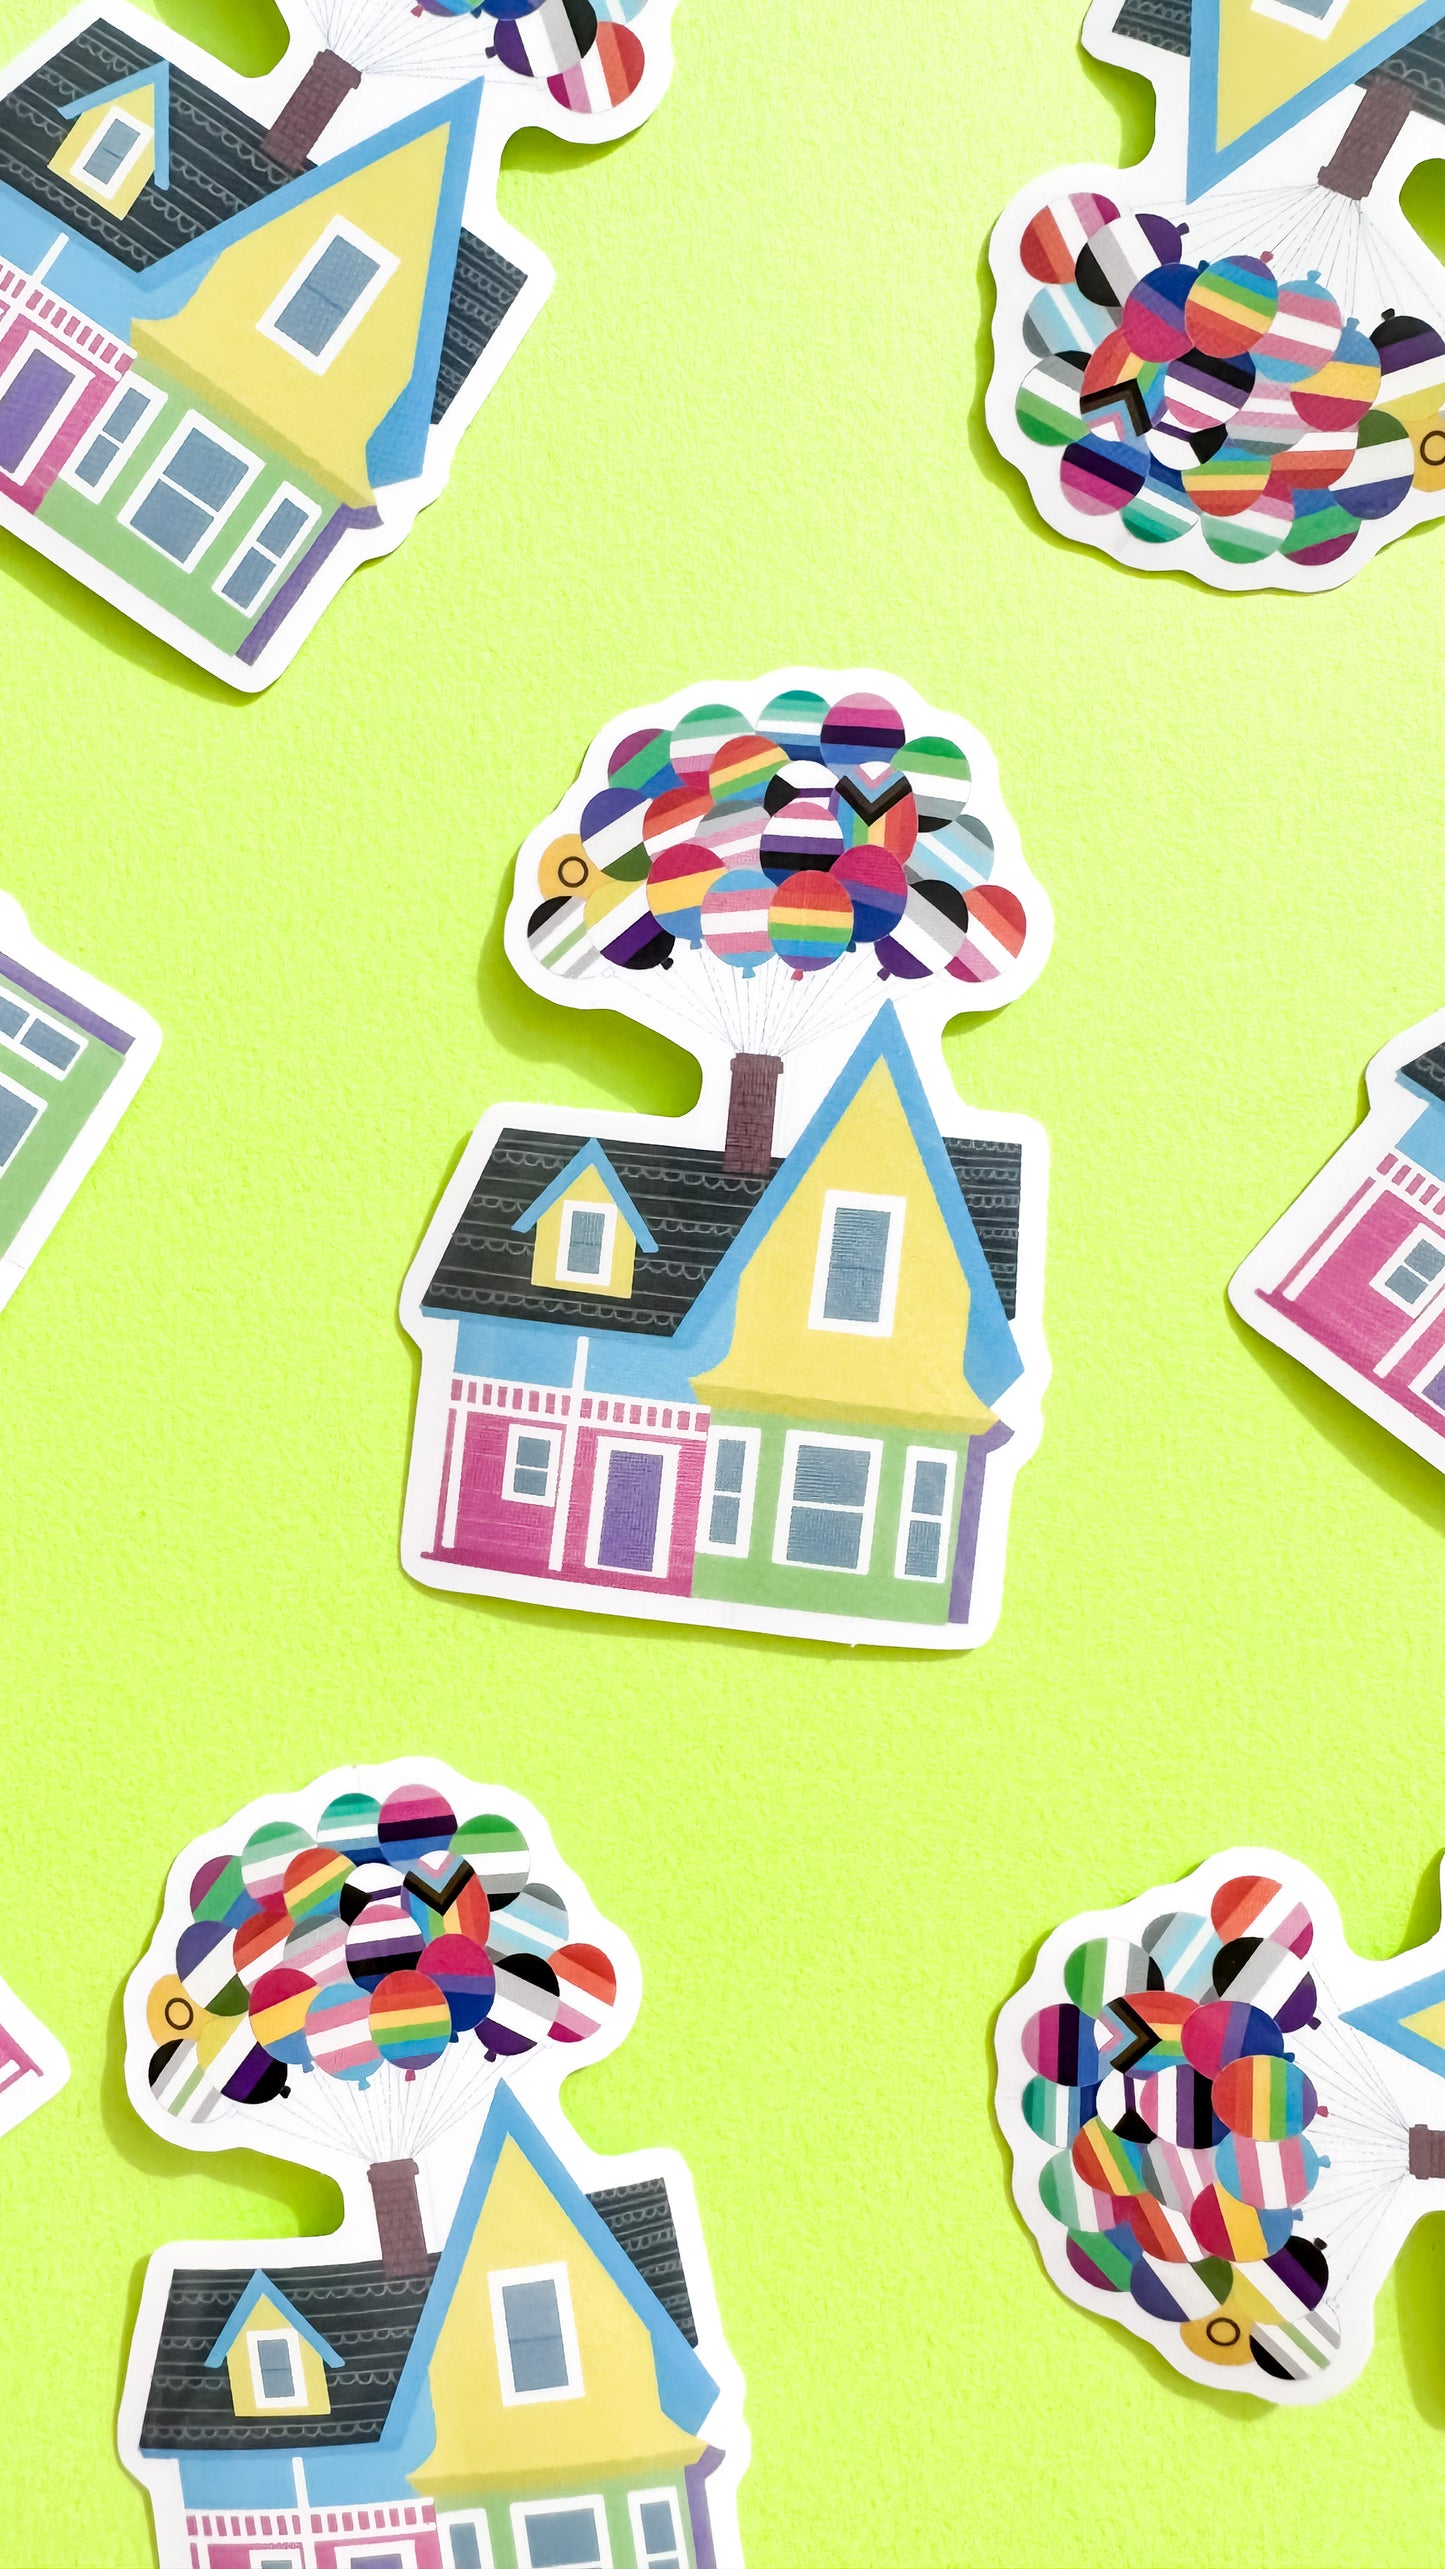 PRIDE Balloon House Sticker